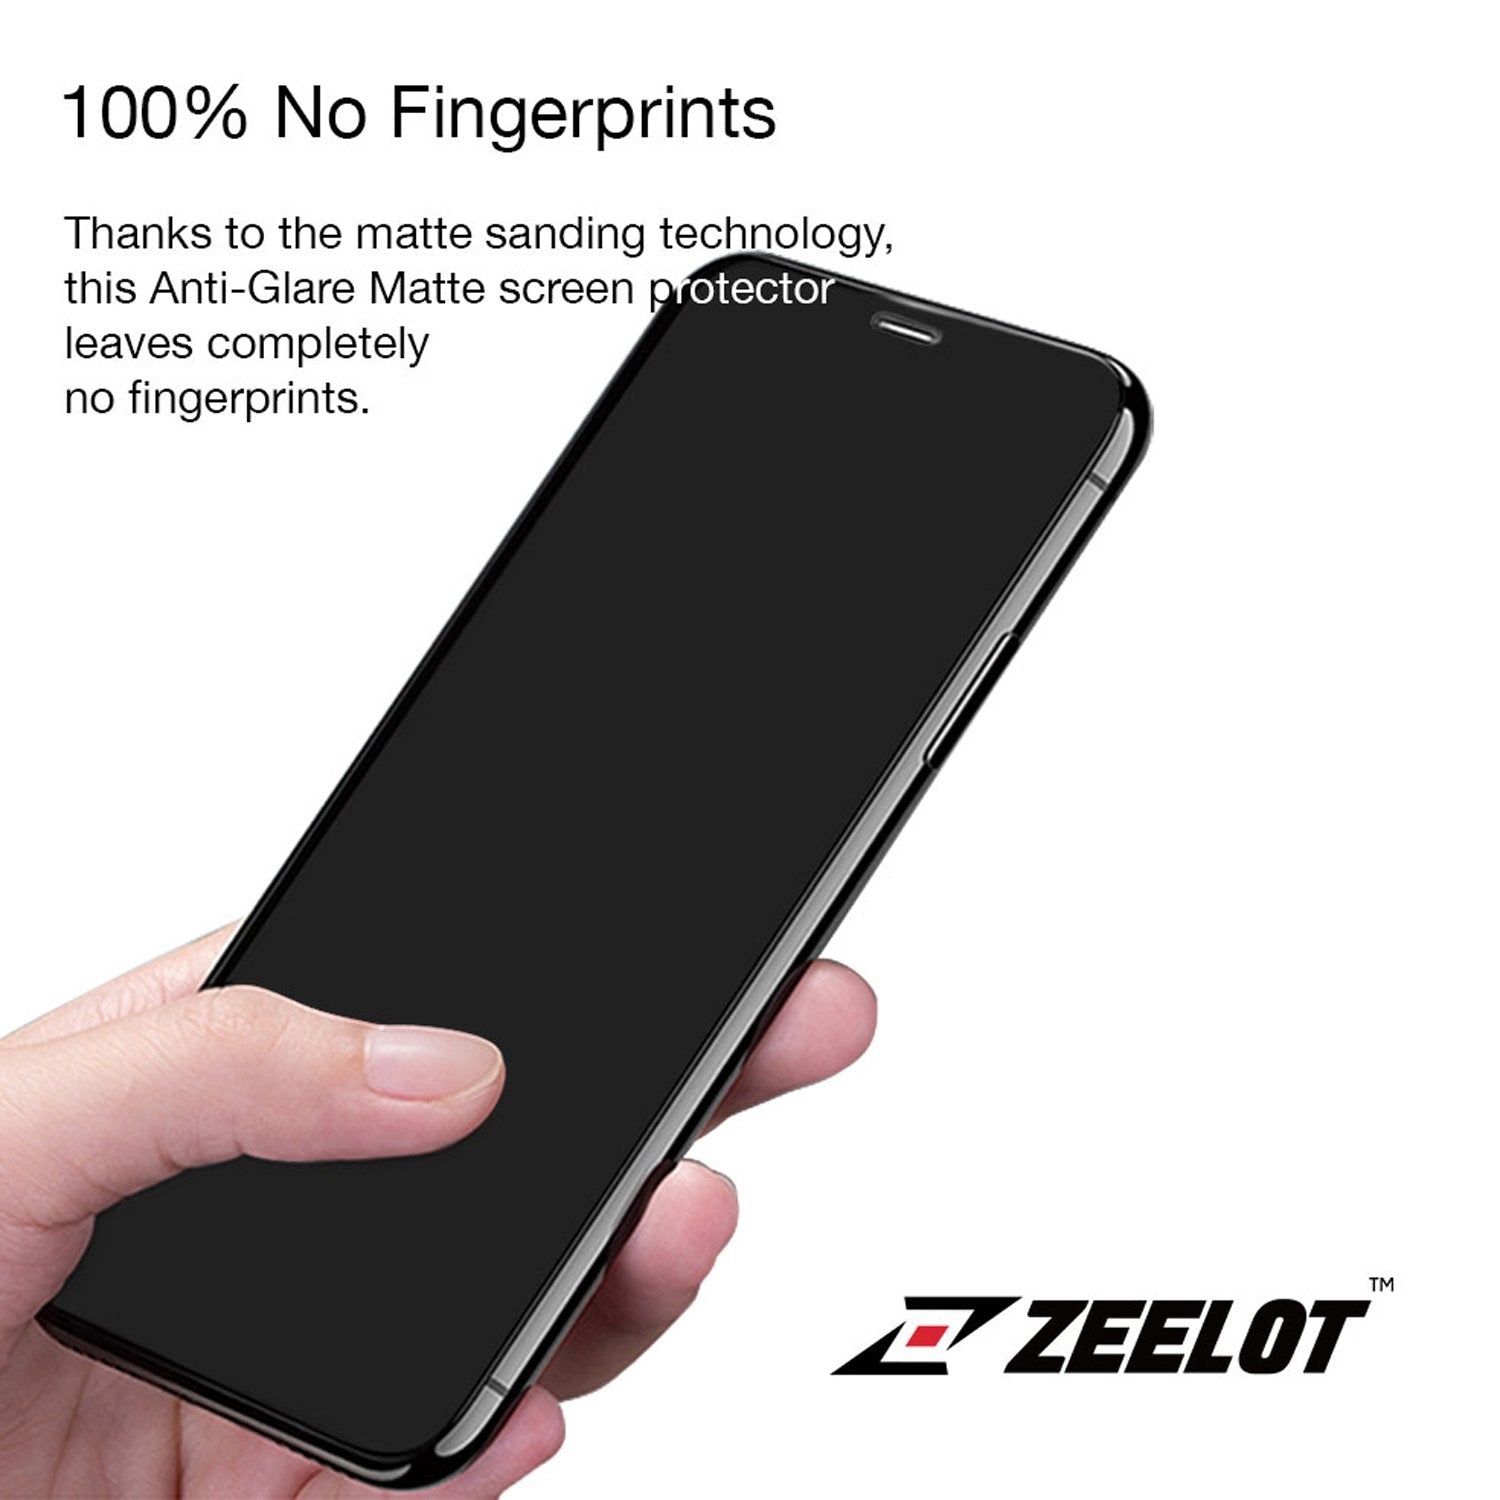 ZEELOT PureGlass 3D LOCA Tempered Glass Screen Protector for Samsung Galaxy Note 9/8, Clear LOCA Tempered Glass ZEELOT 